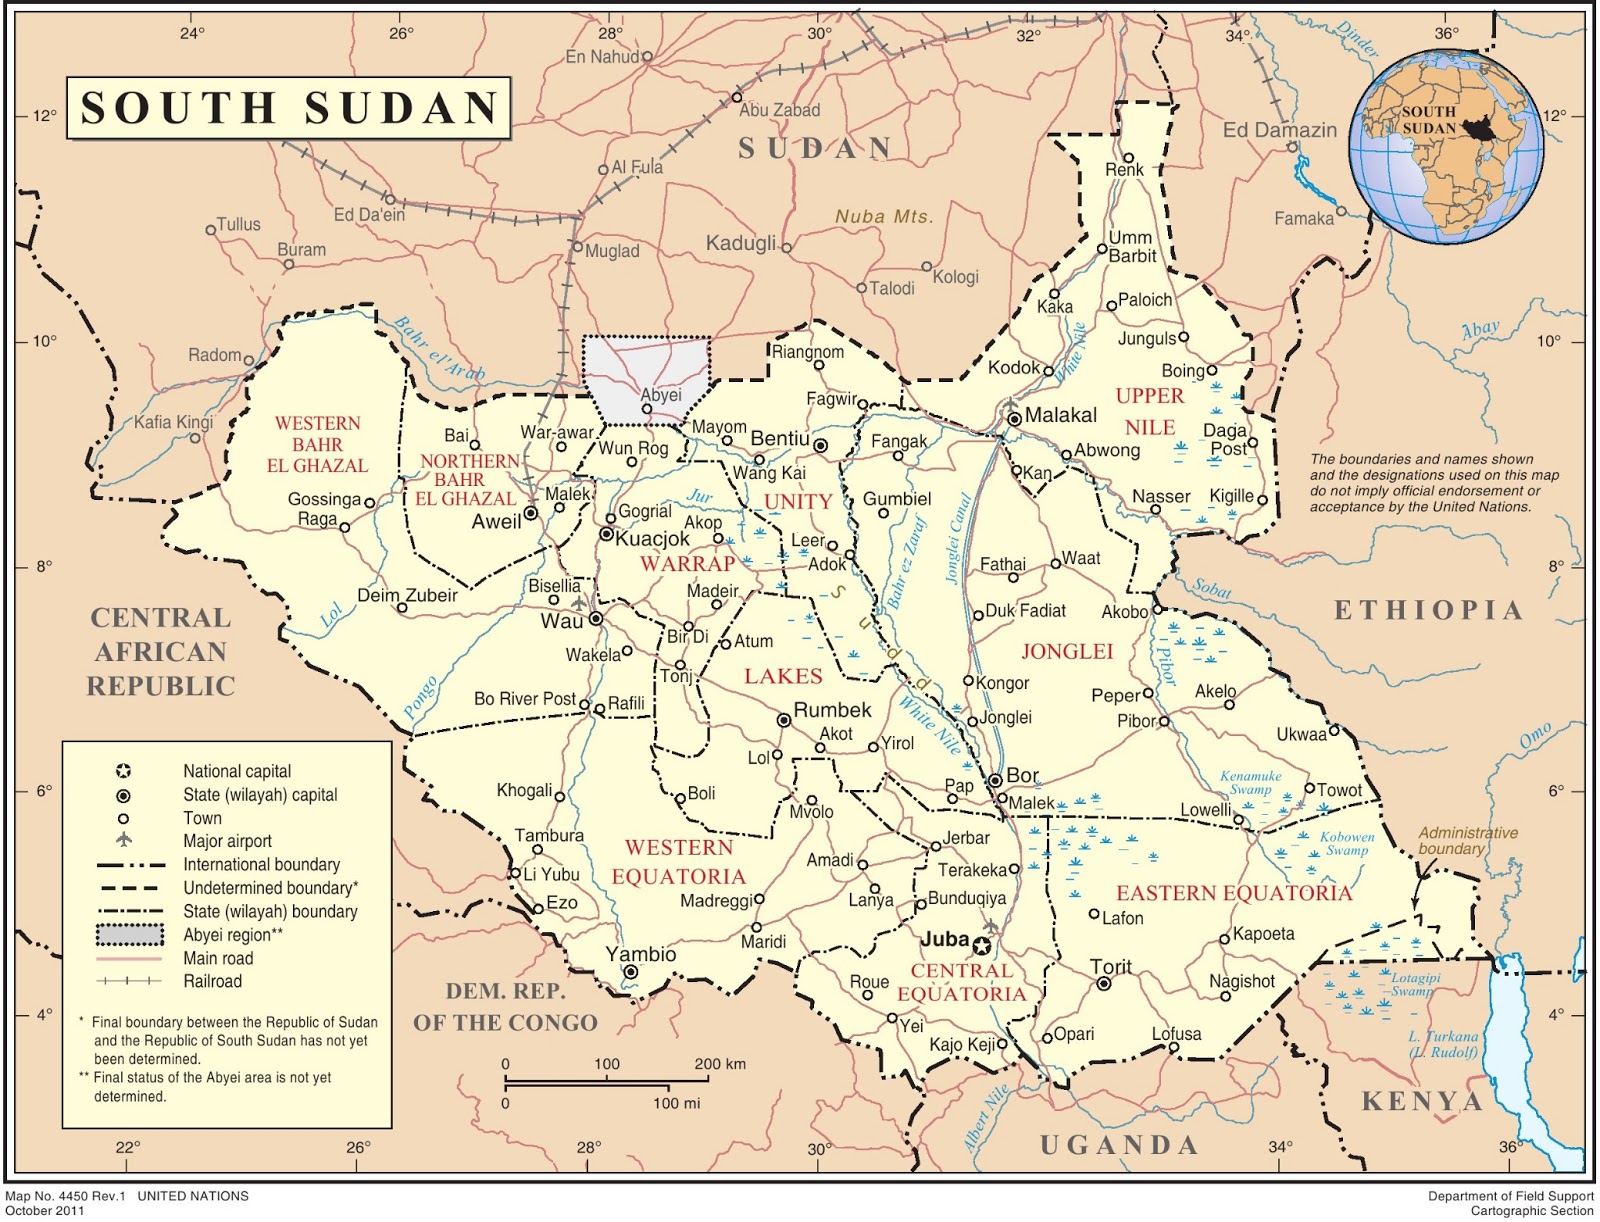 MAPS OF SOUTH SUDAN